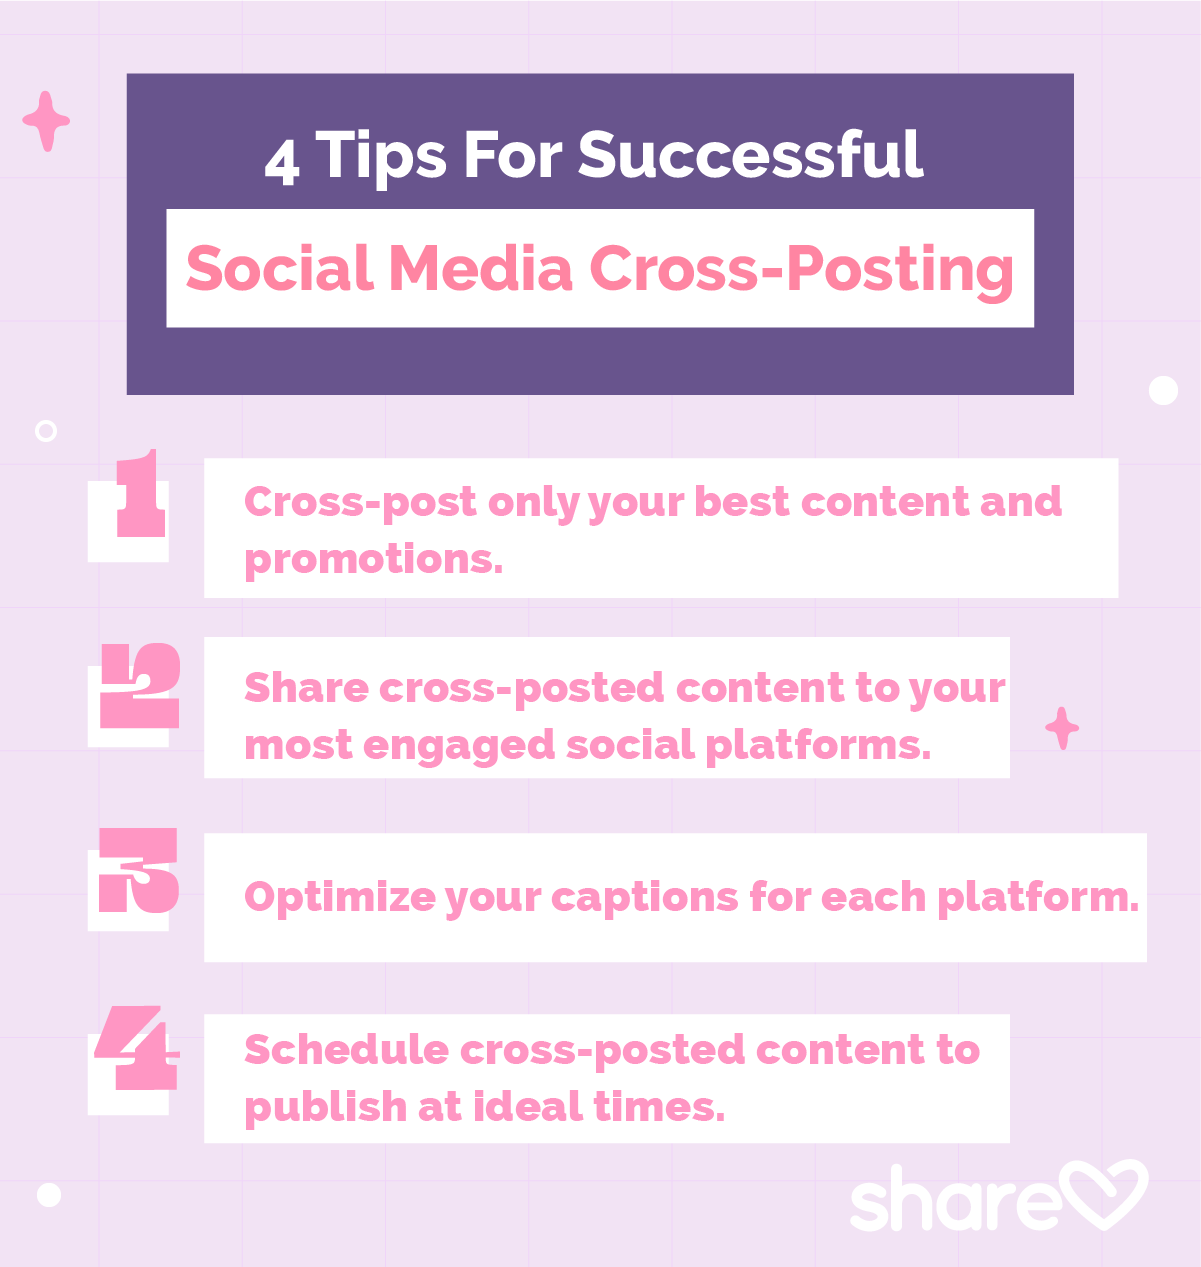 Tips For Successful Social Media Cross-Posting